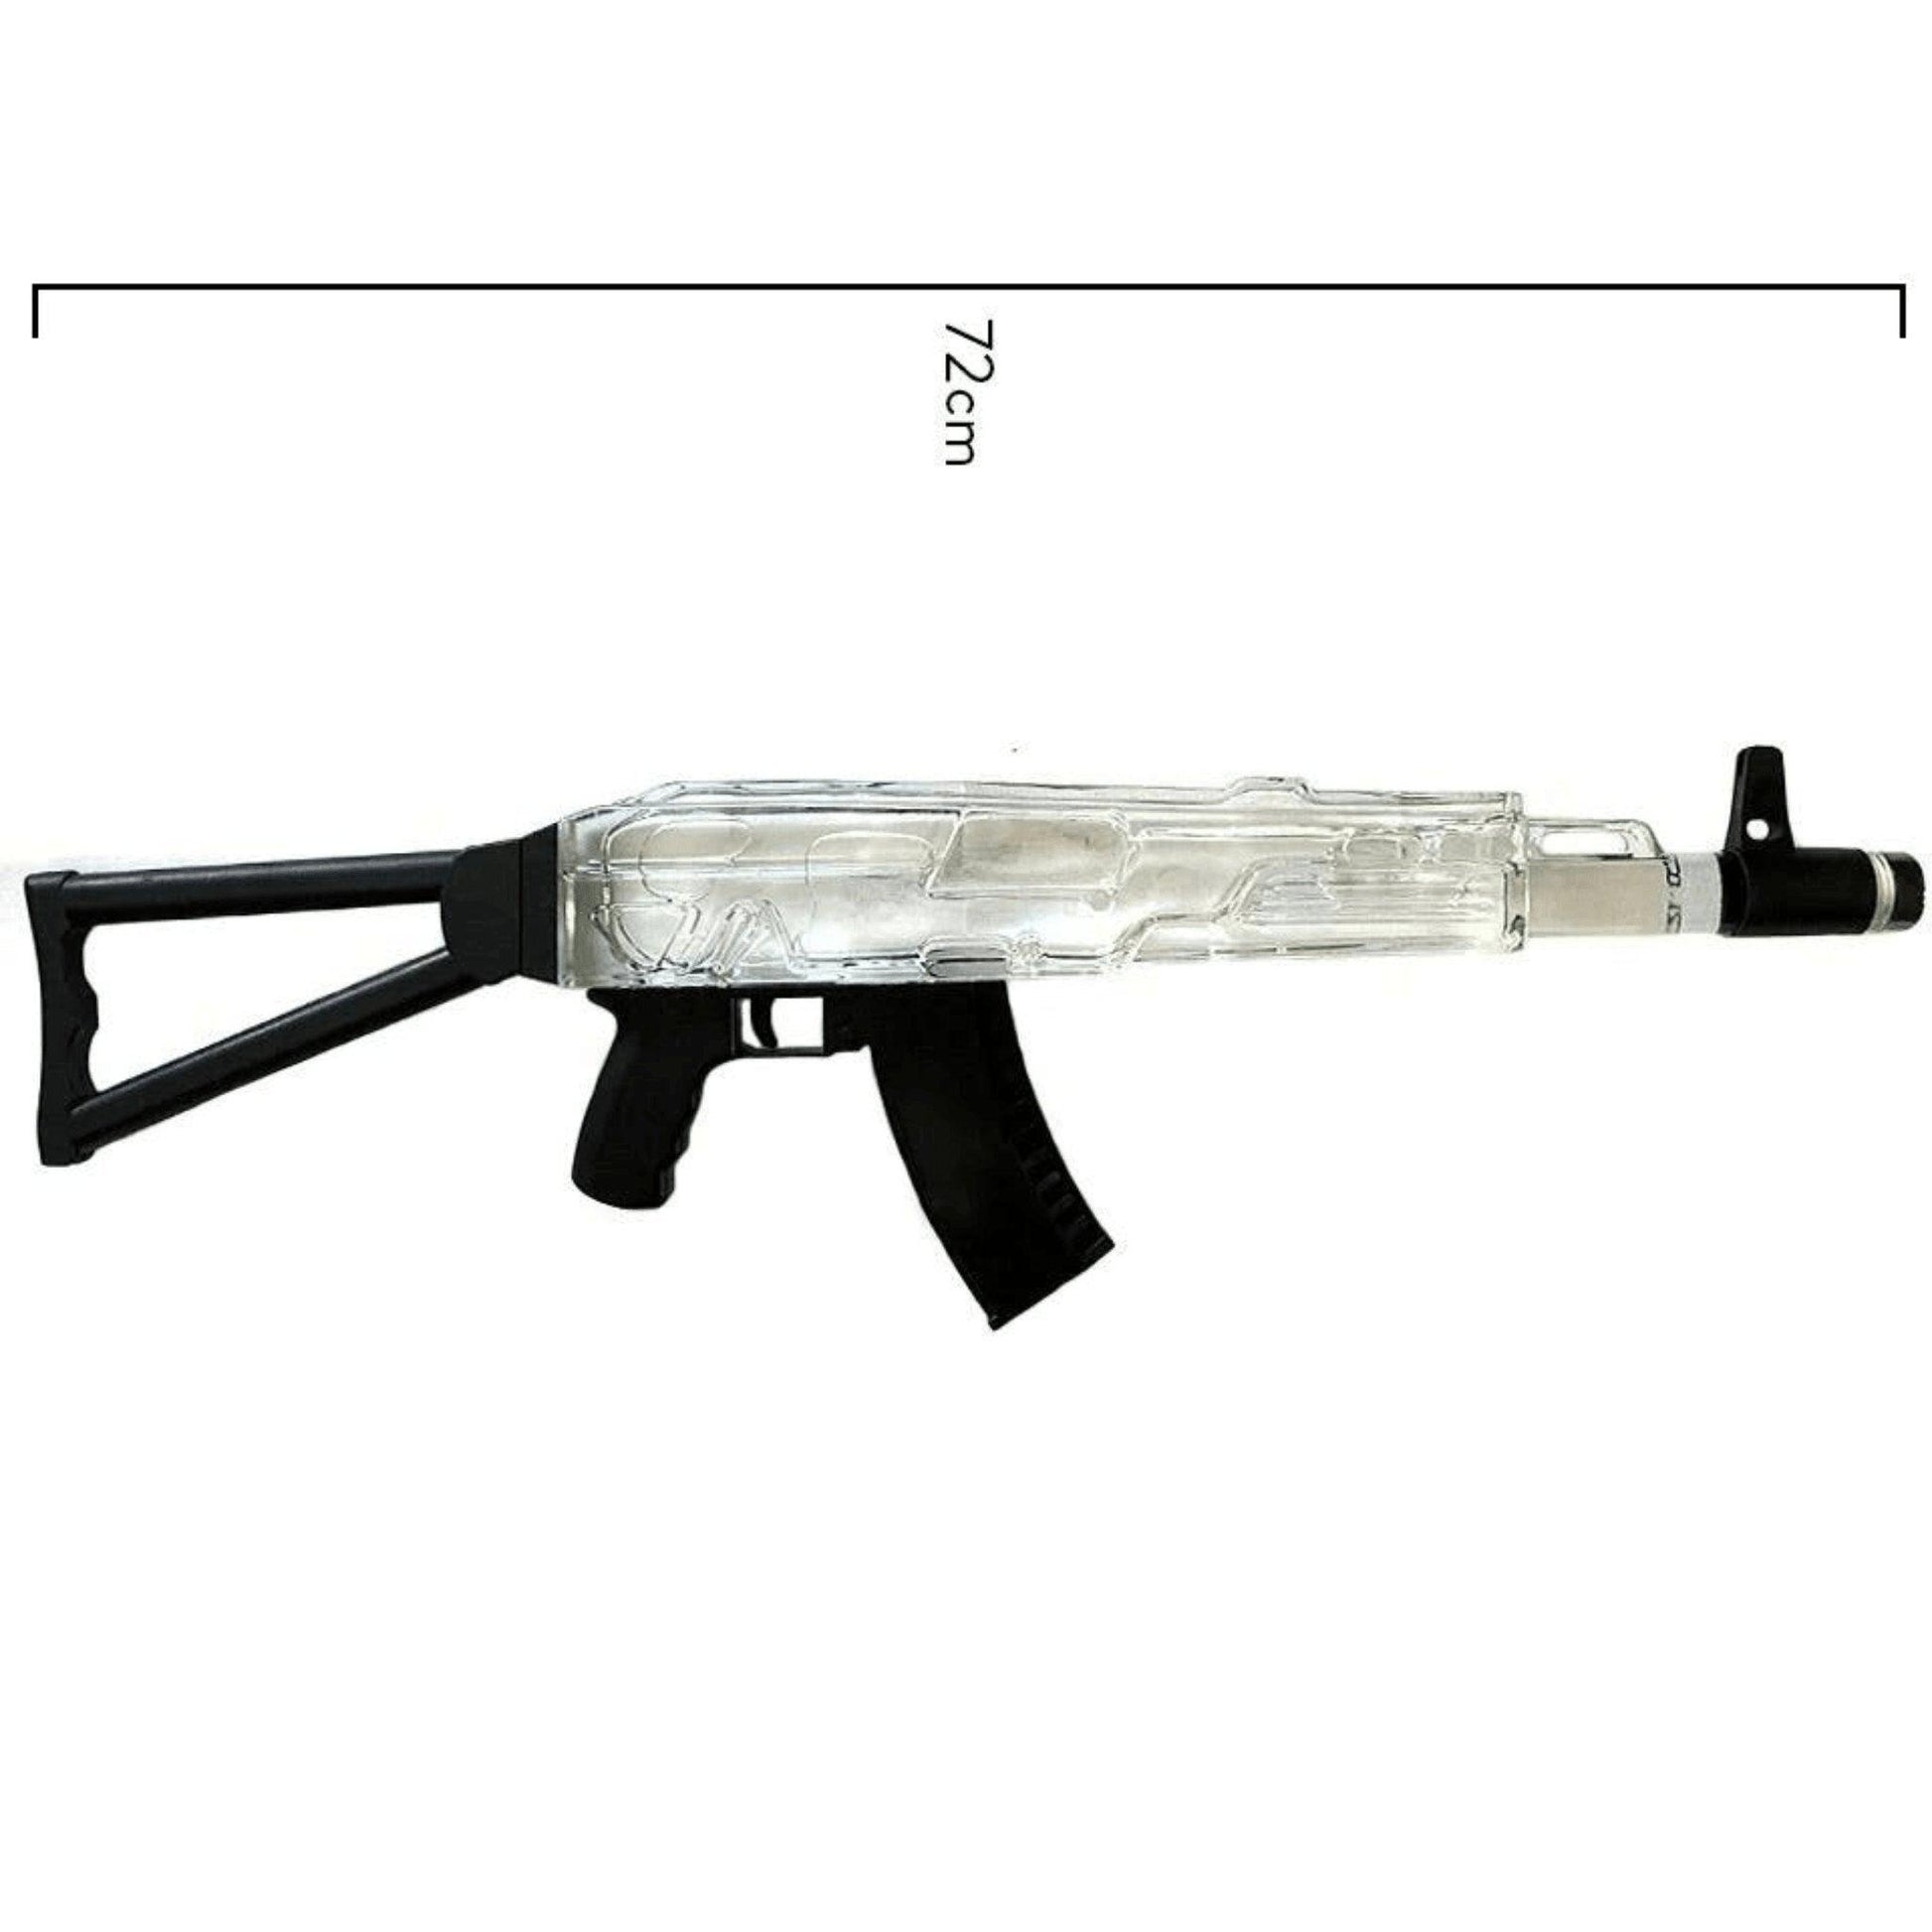 Kalashnikov AK47 Premium Vodka 700mL - Booze House